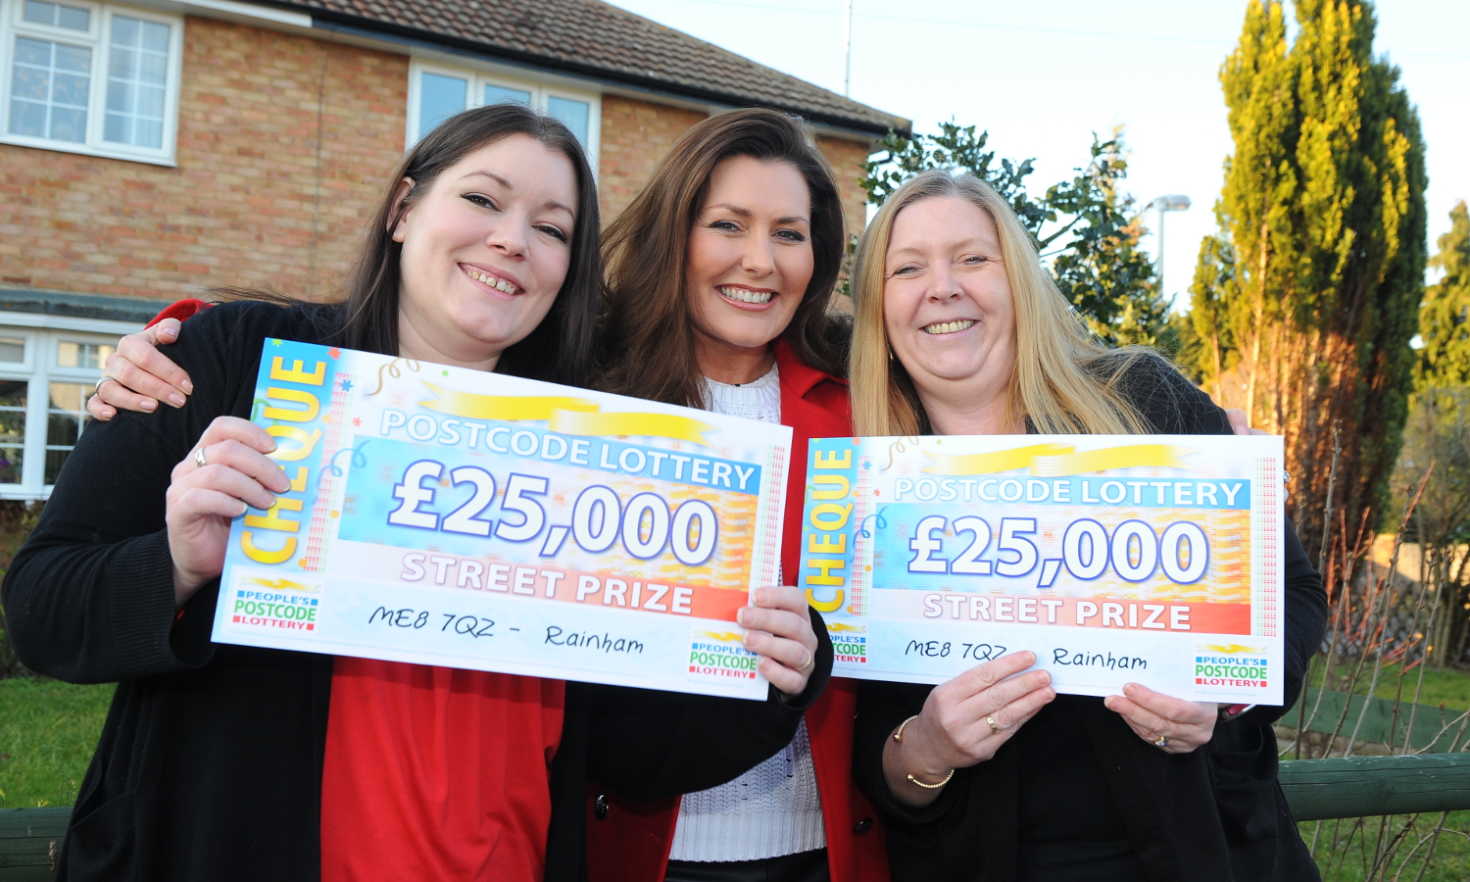 Rainham £25,000 winners Mary and Jacqueline, along with People's Postcode Lottery presenter Judie McCourt